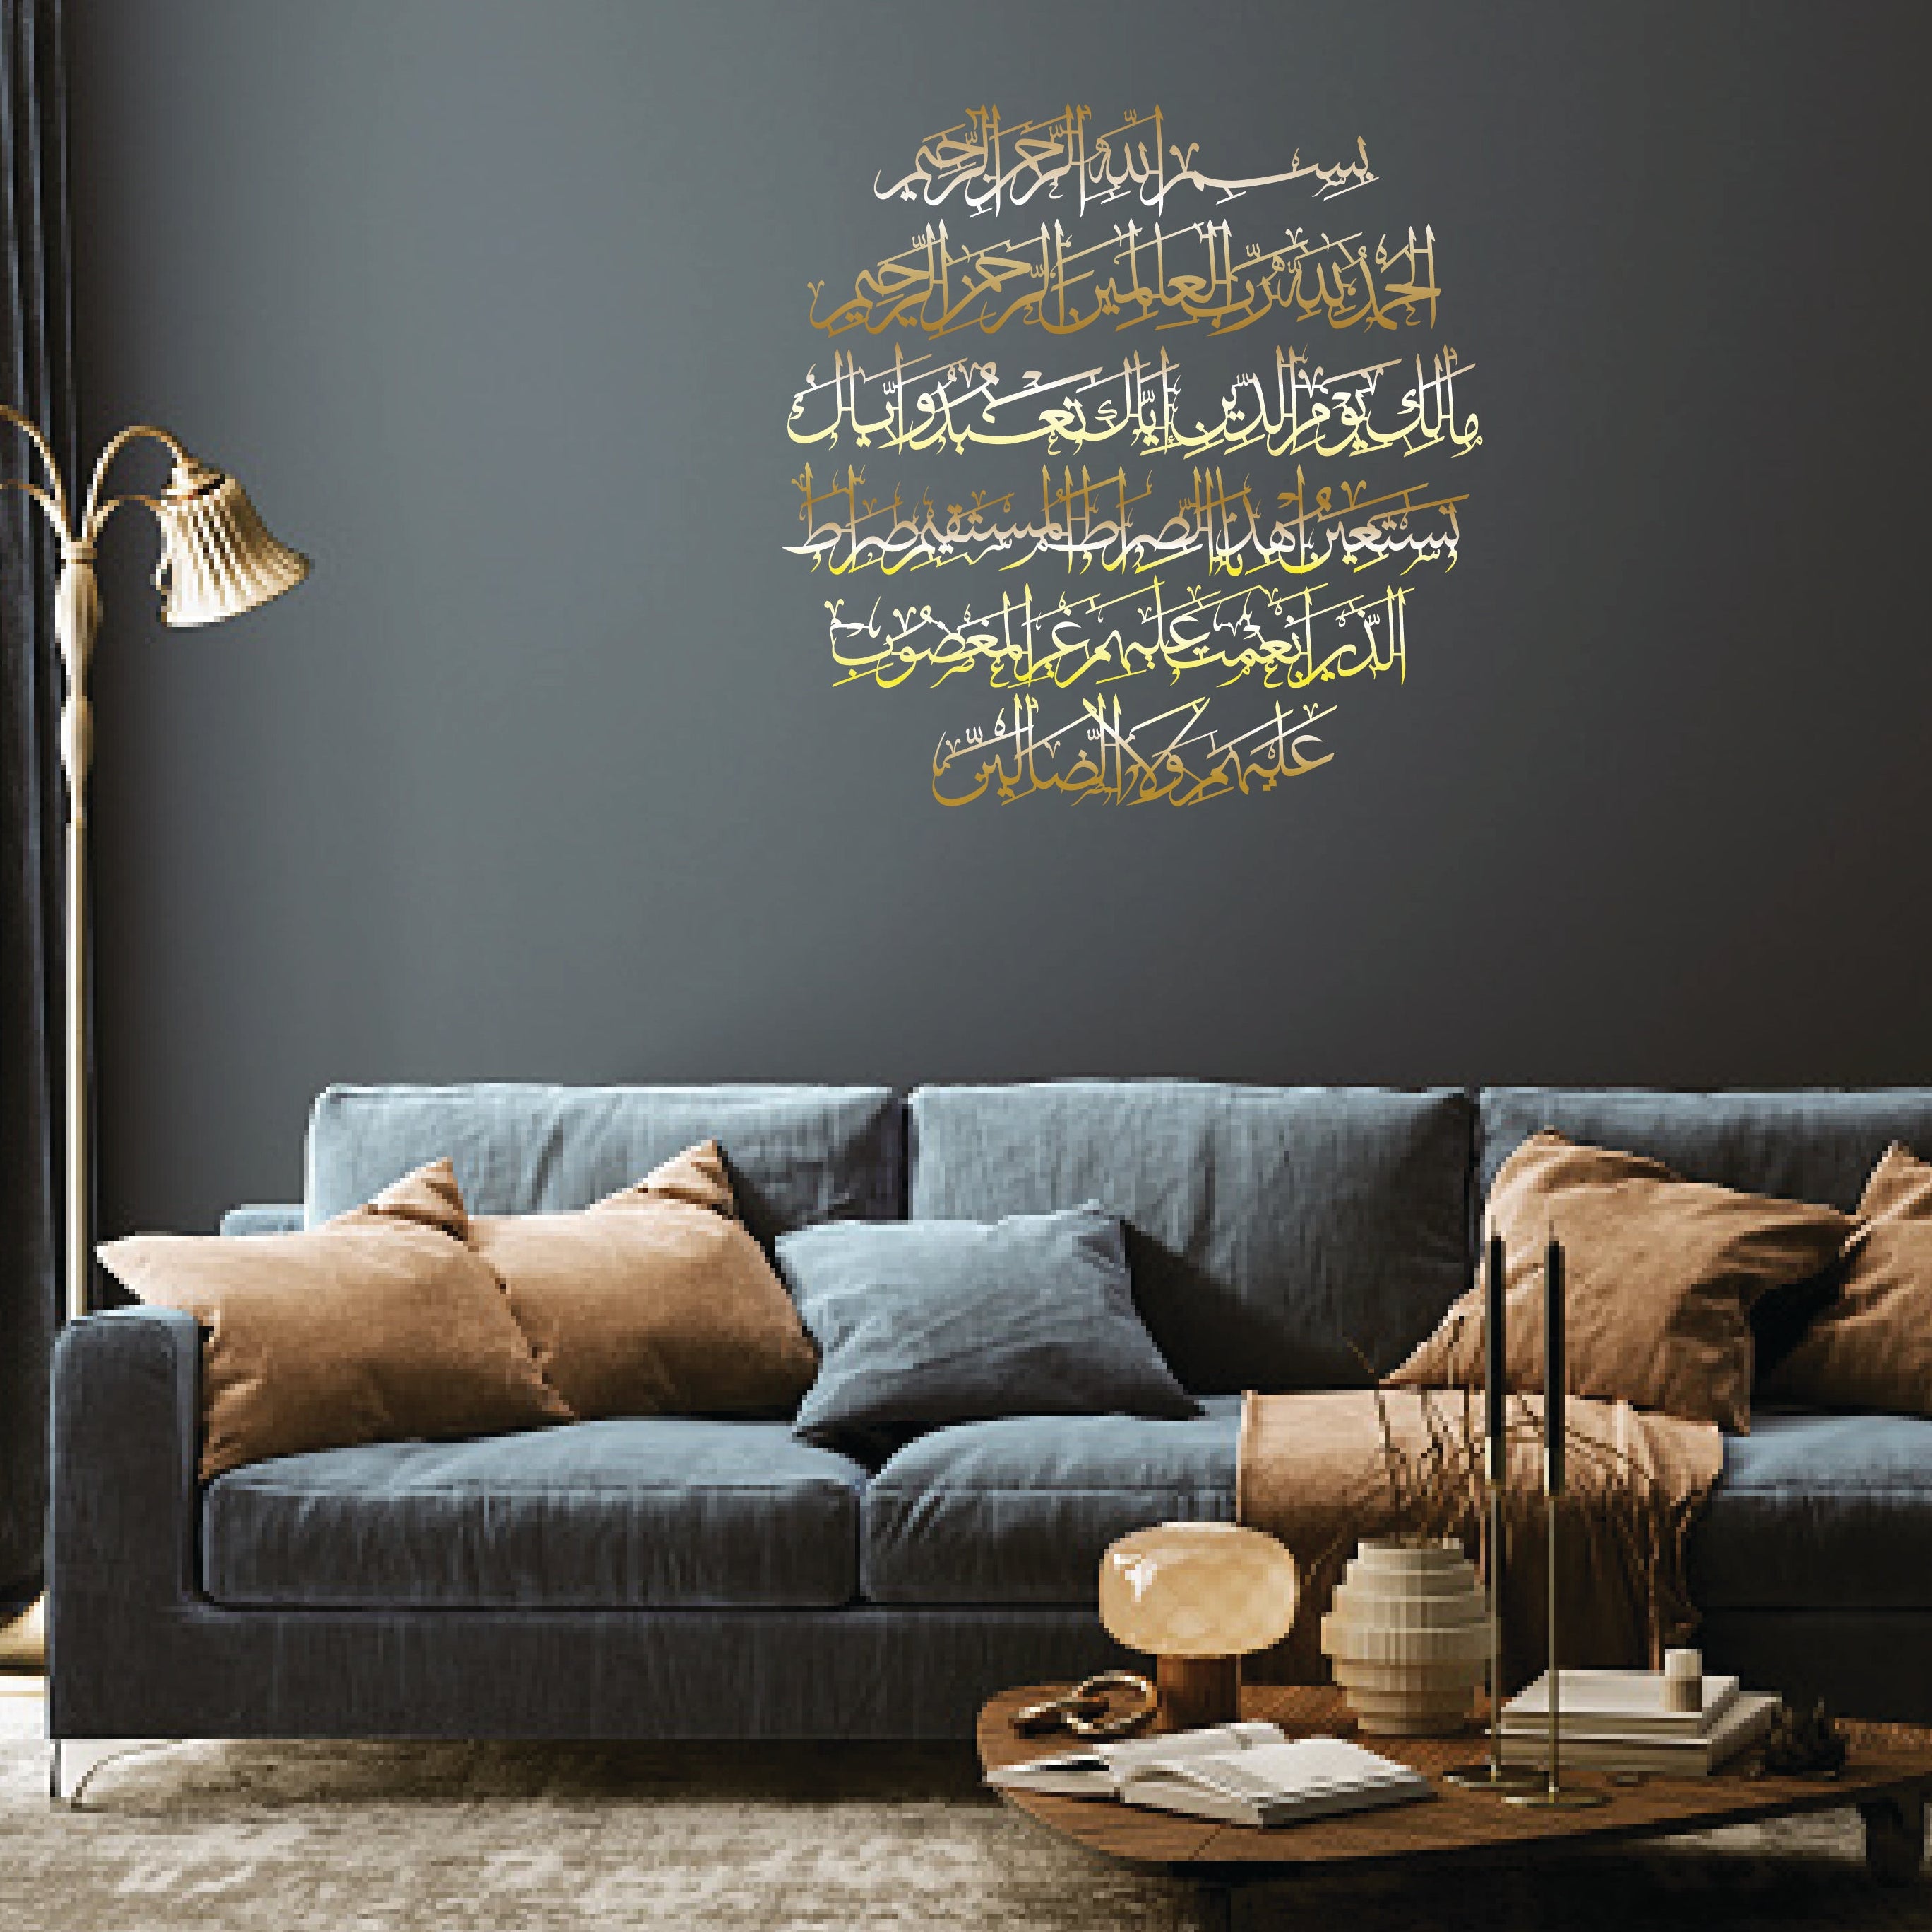 Surah Fatiha Alhamdulillah Complete Surah Metal wall art